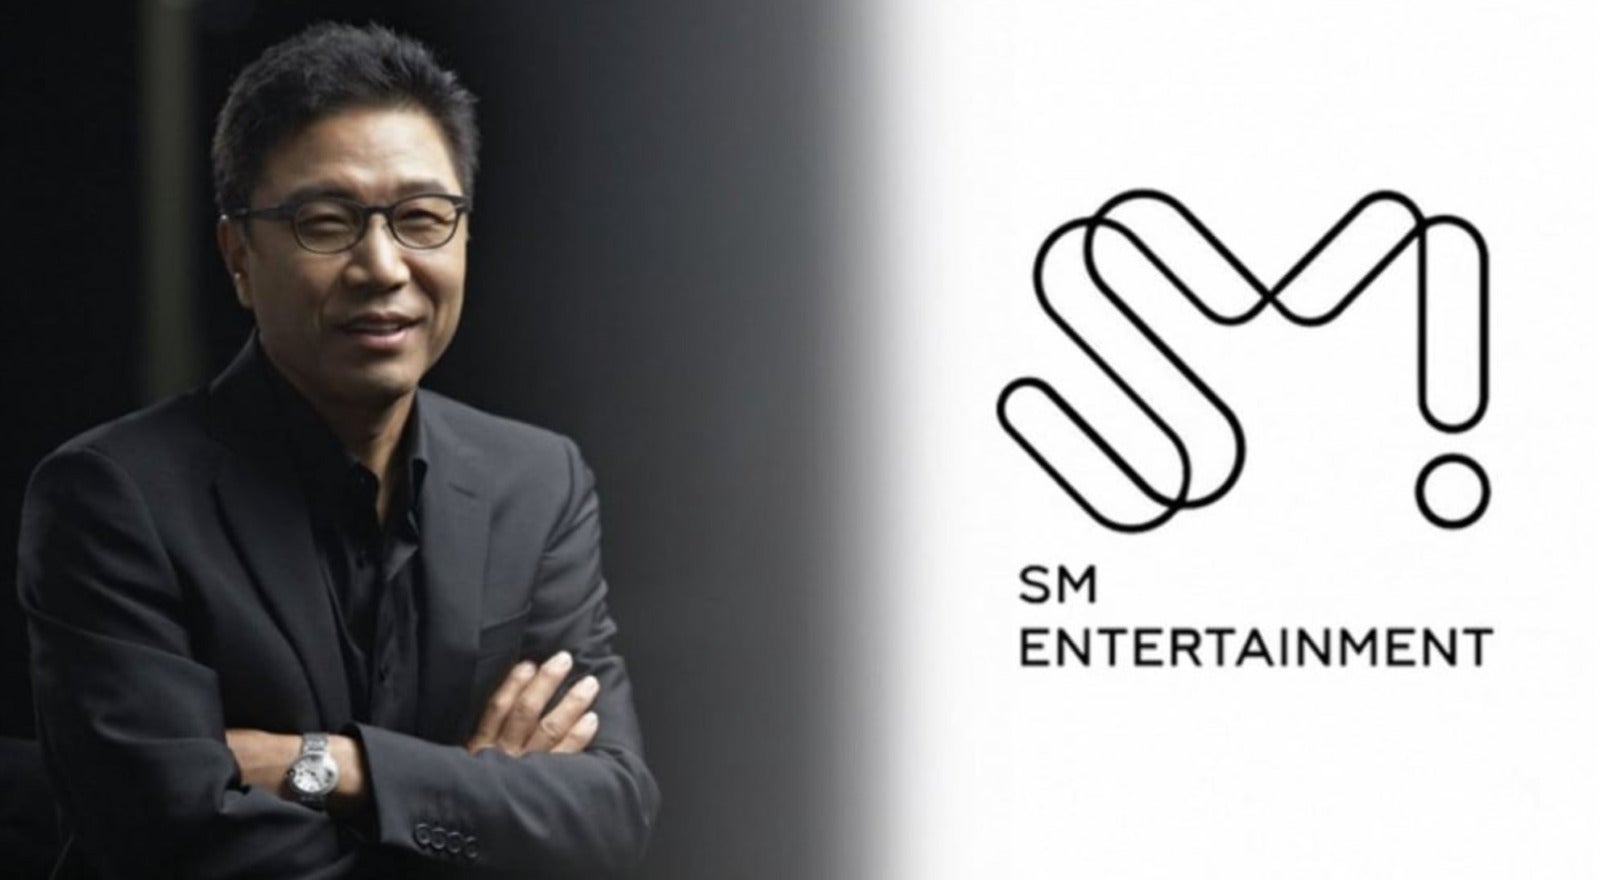 HYBE ซื้อหุ้น 14.8% จาก “อีซูมาน” เตรียมขึ้นเป็นผู้ถือหุ้นรายใหญ่ที่สุดของ SM Entertainment